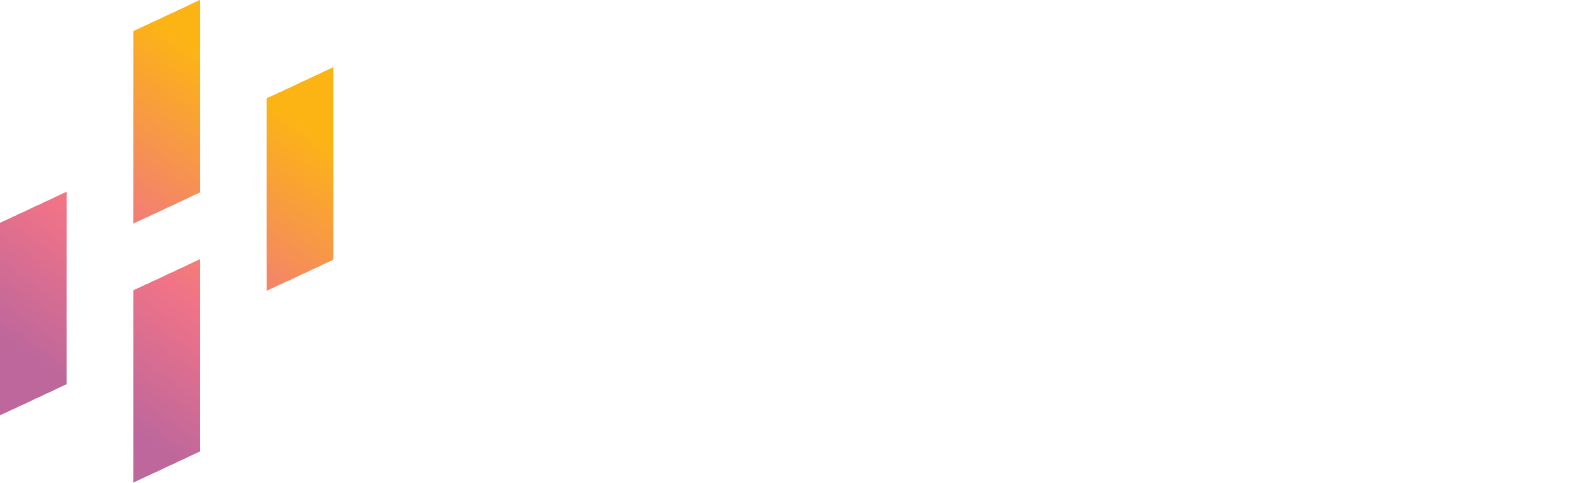 Horizon Therapeutics
 logo large for dark backgrounds (transparent PNG)